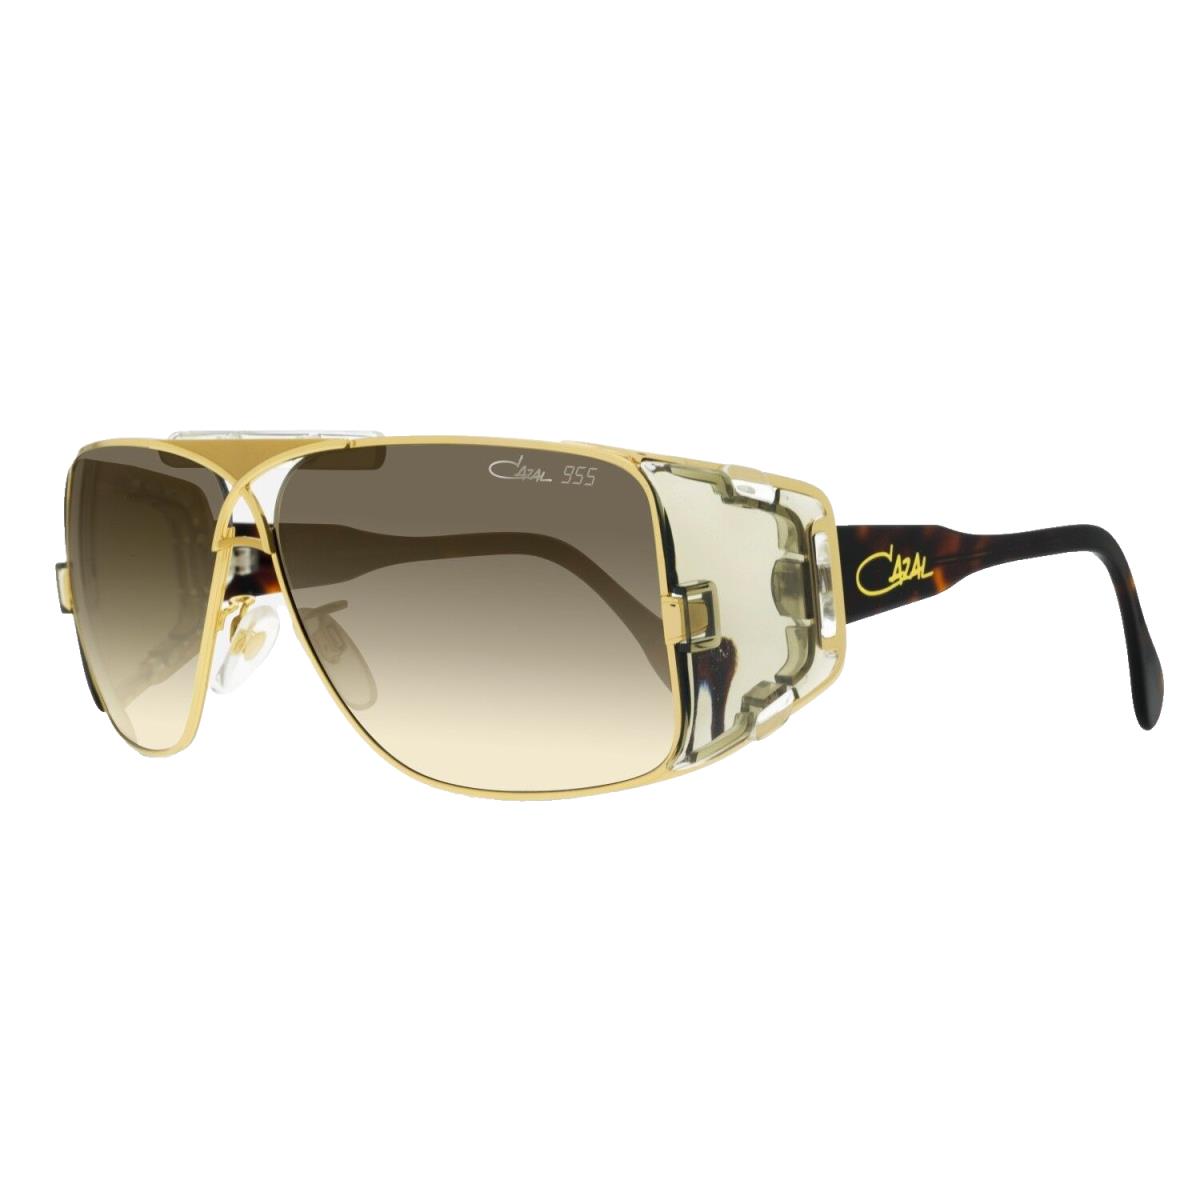 Cazal Legends 955 Gold Havana/brown Shaded 097 Sunglasses